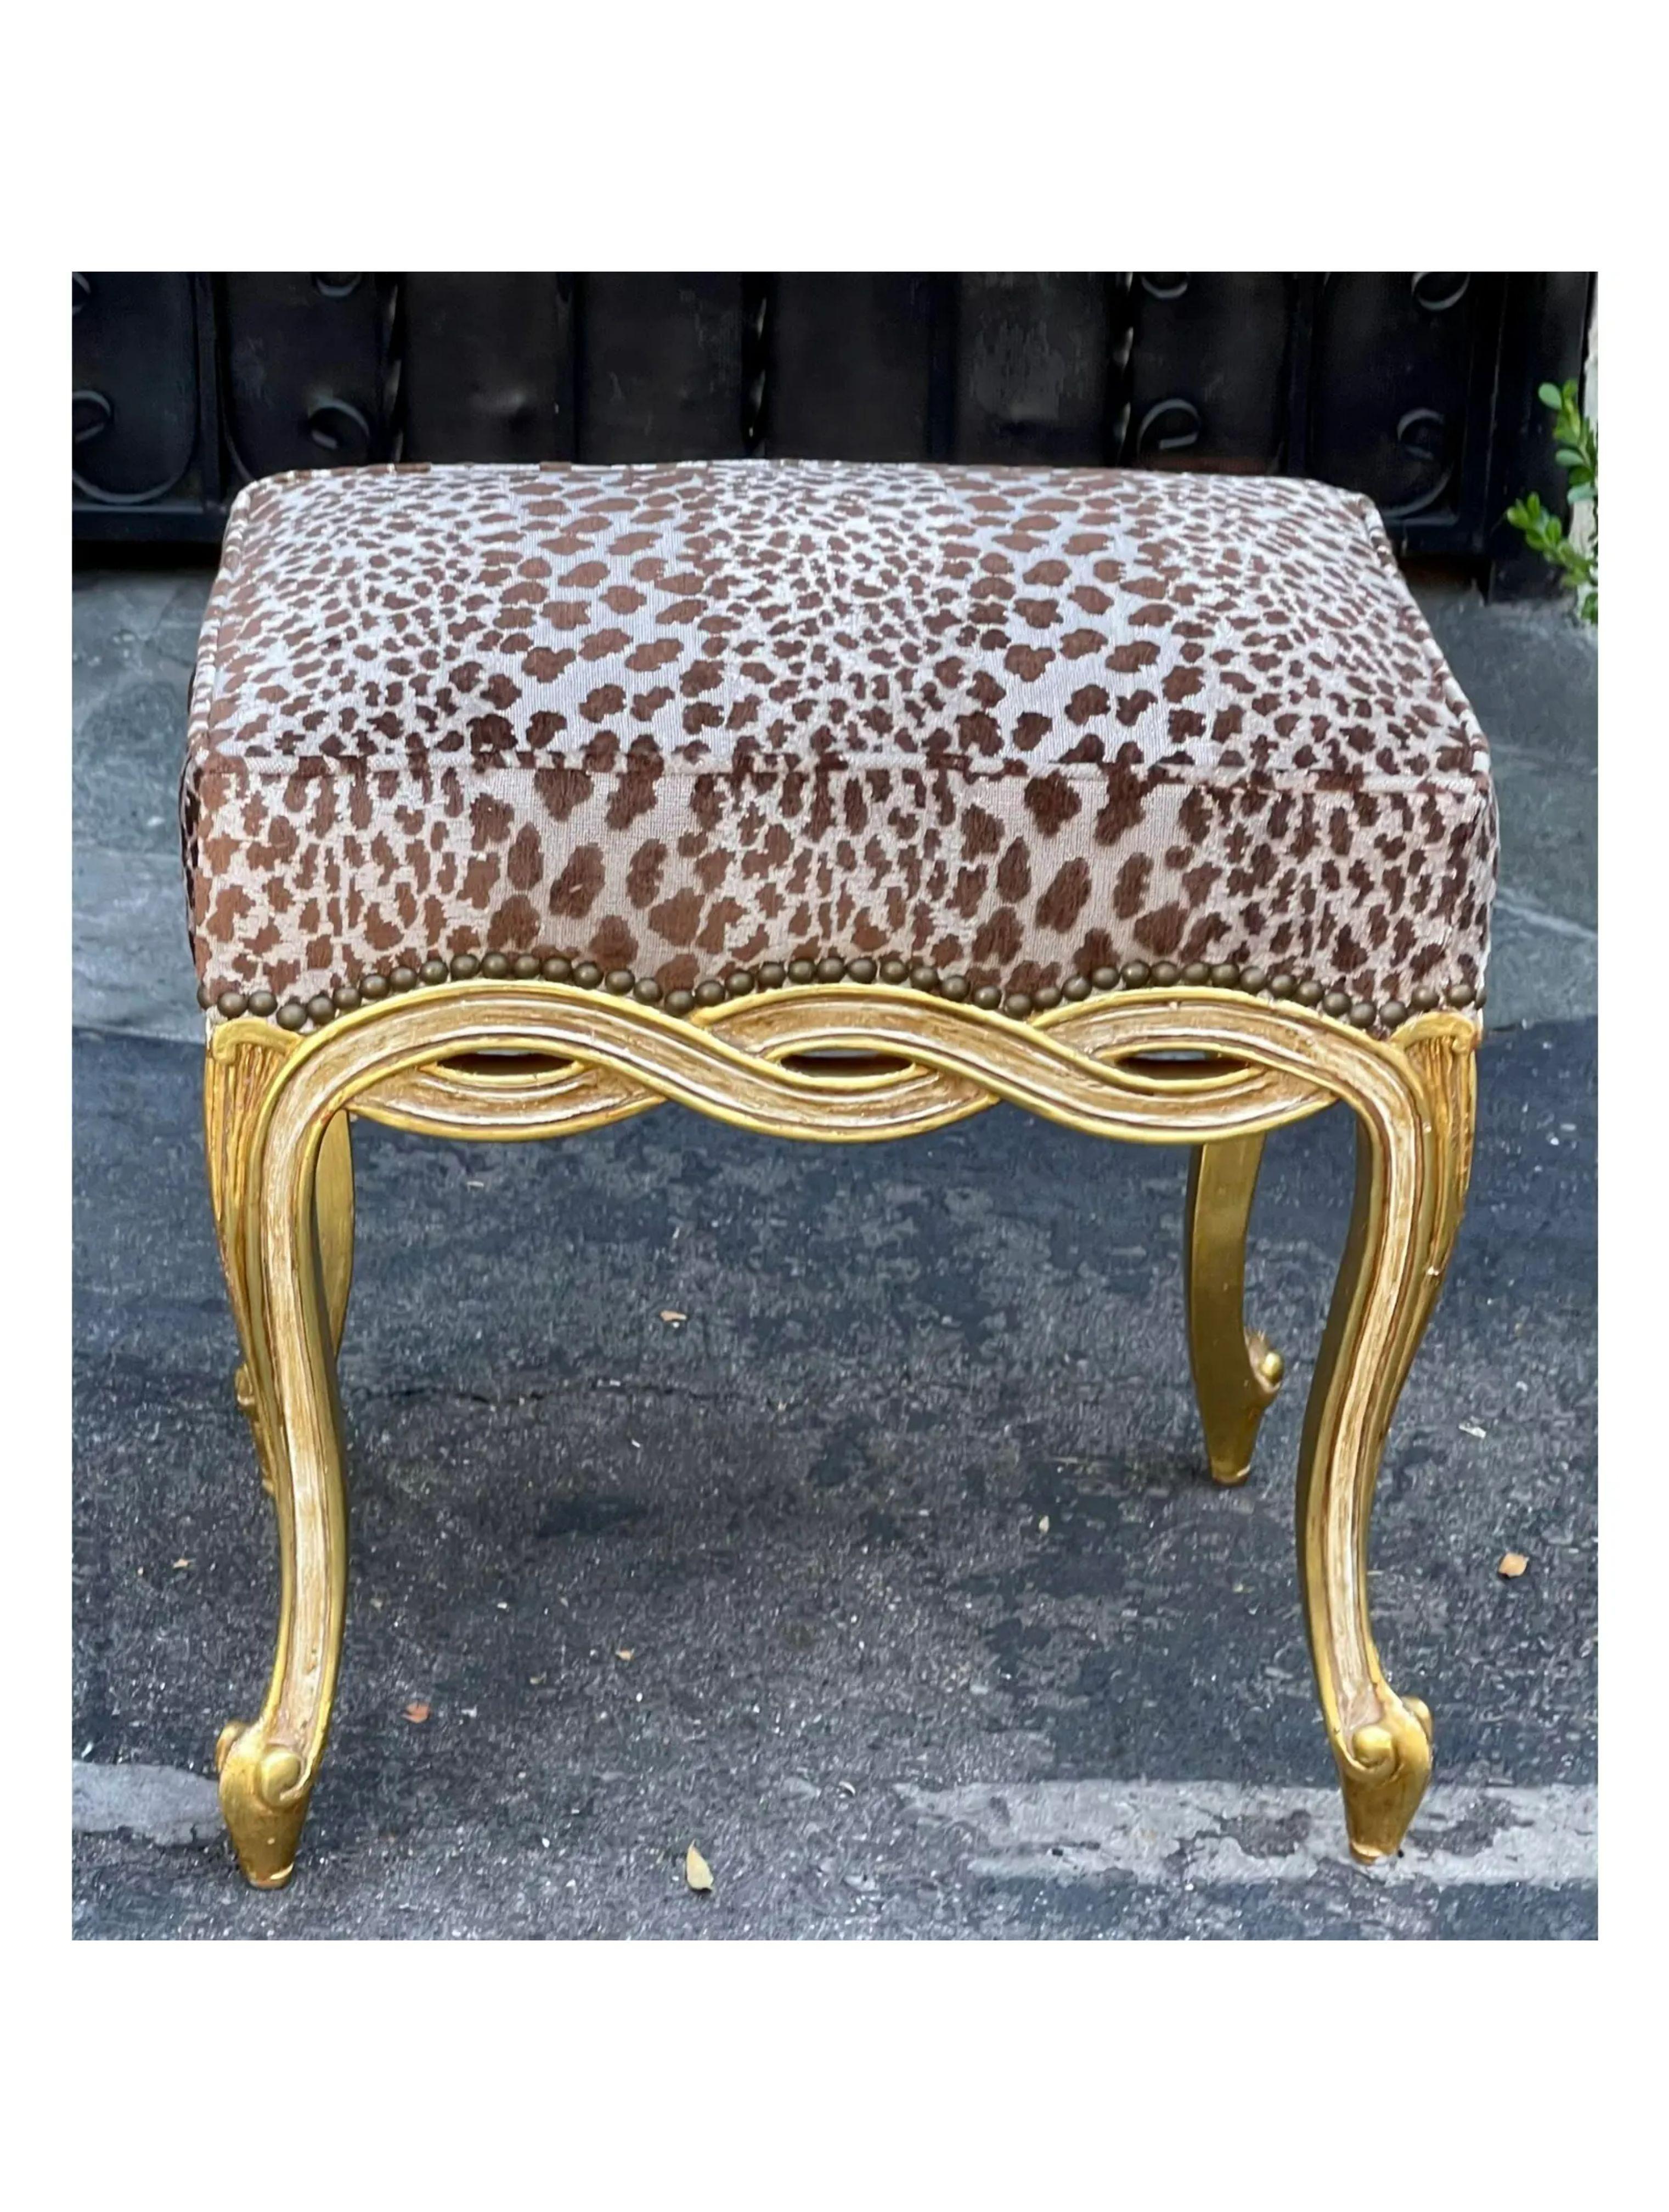 American Regency Style Designer Taboret Bench with Cheetah Velvet by Randy Esada For Sale